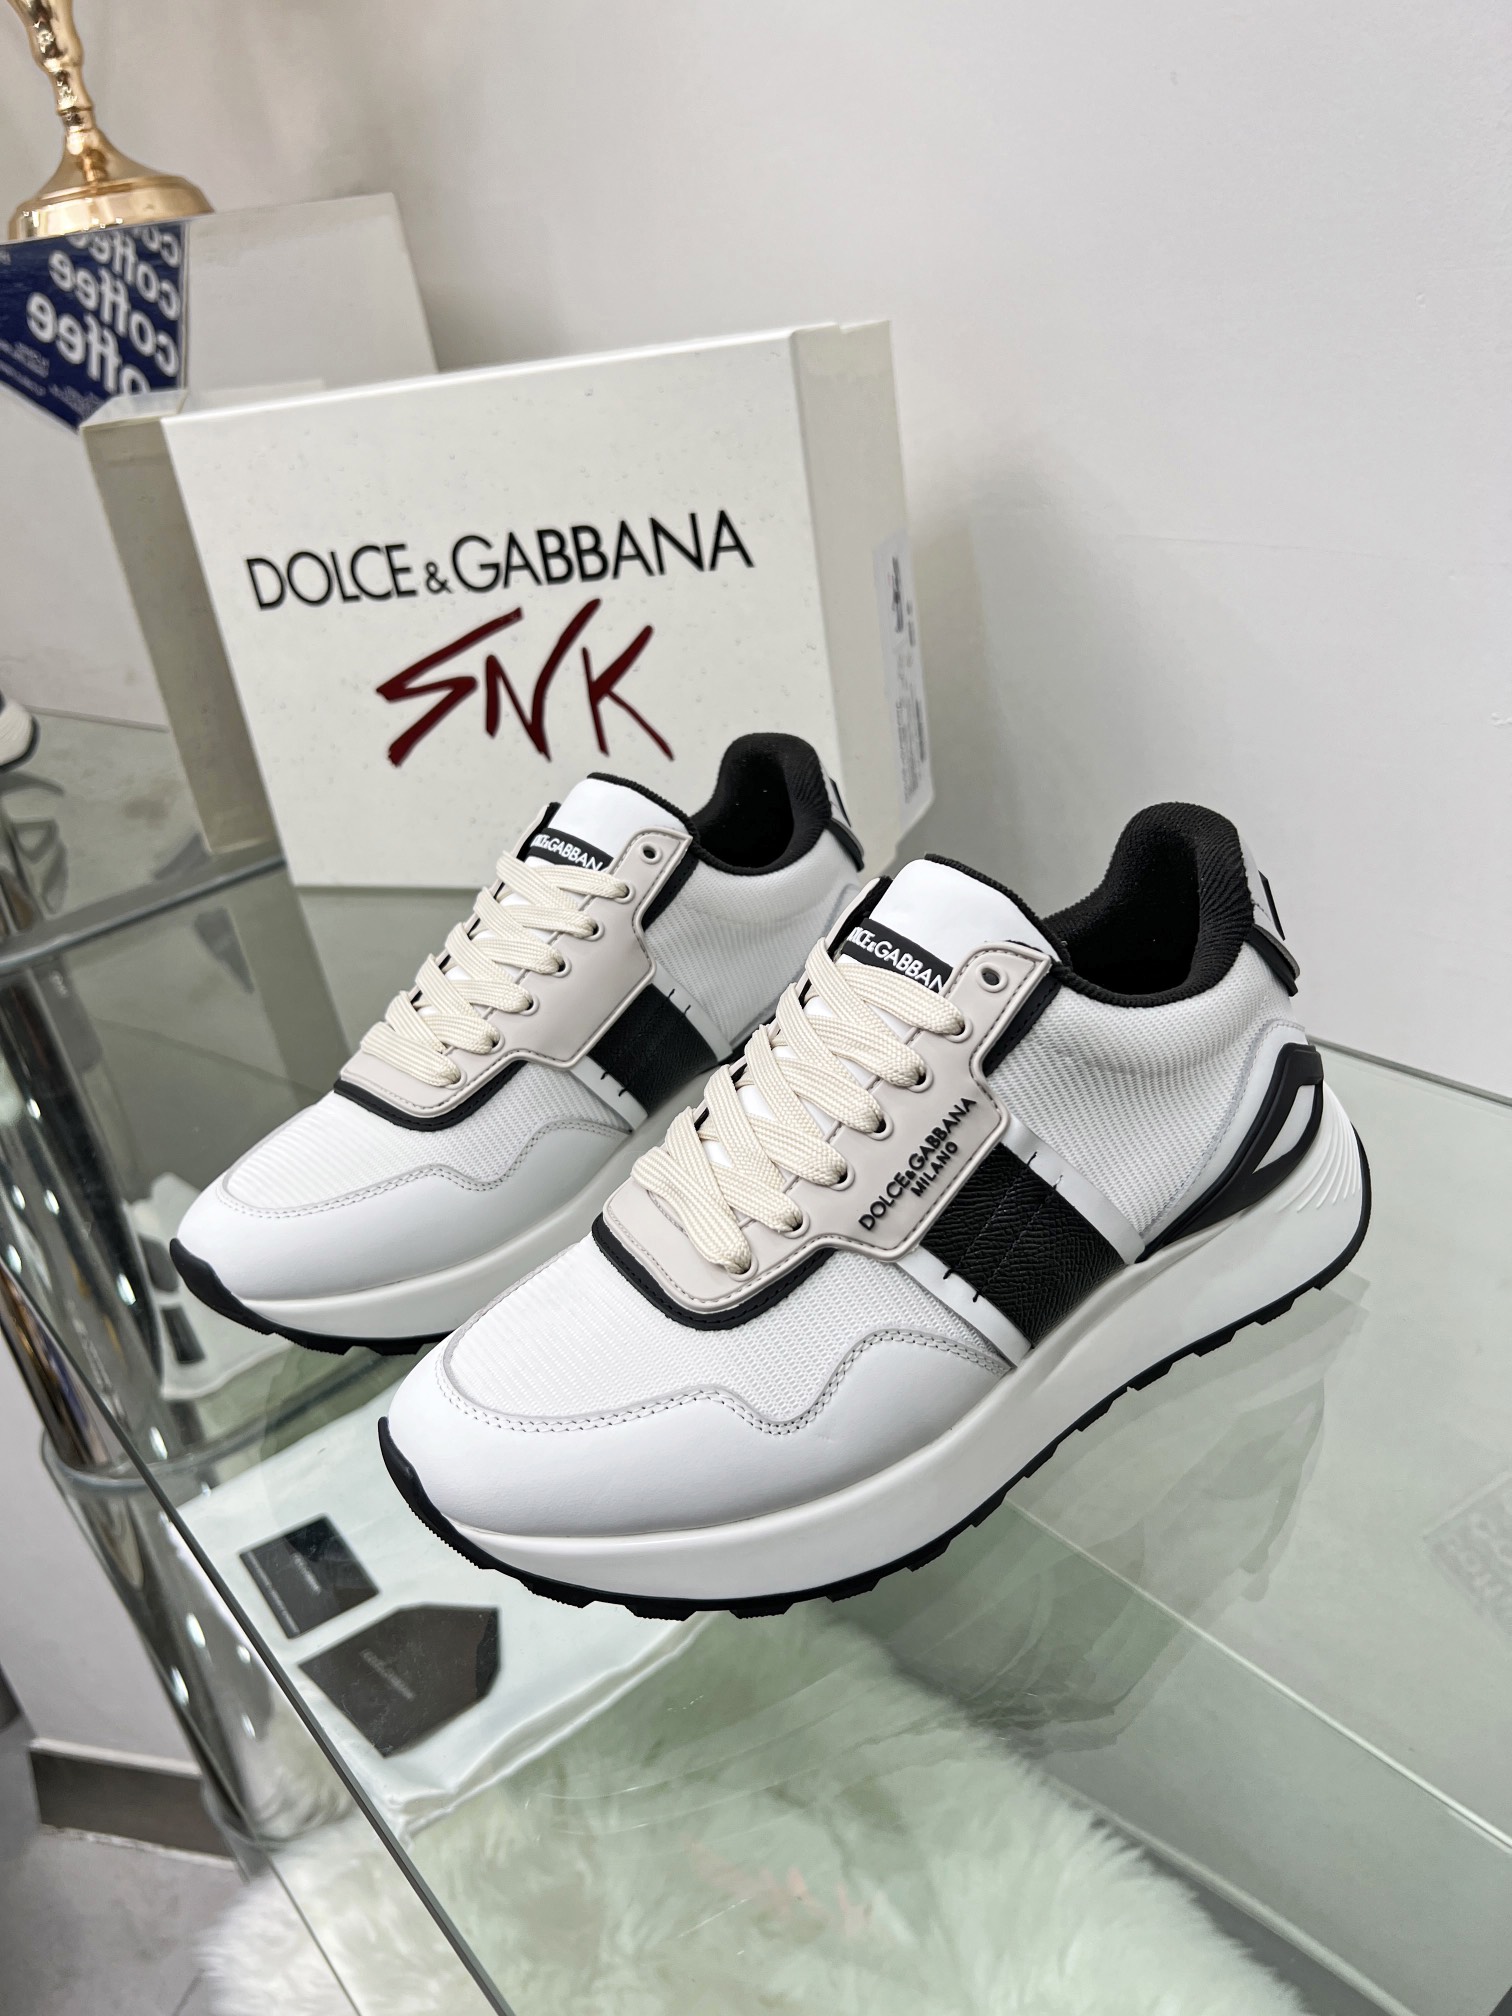 Dolce & Gabbana Casual Shoes Cheap Replica Designer
 TPU Fashion Casual